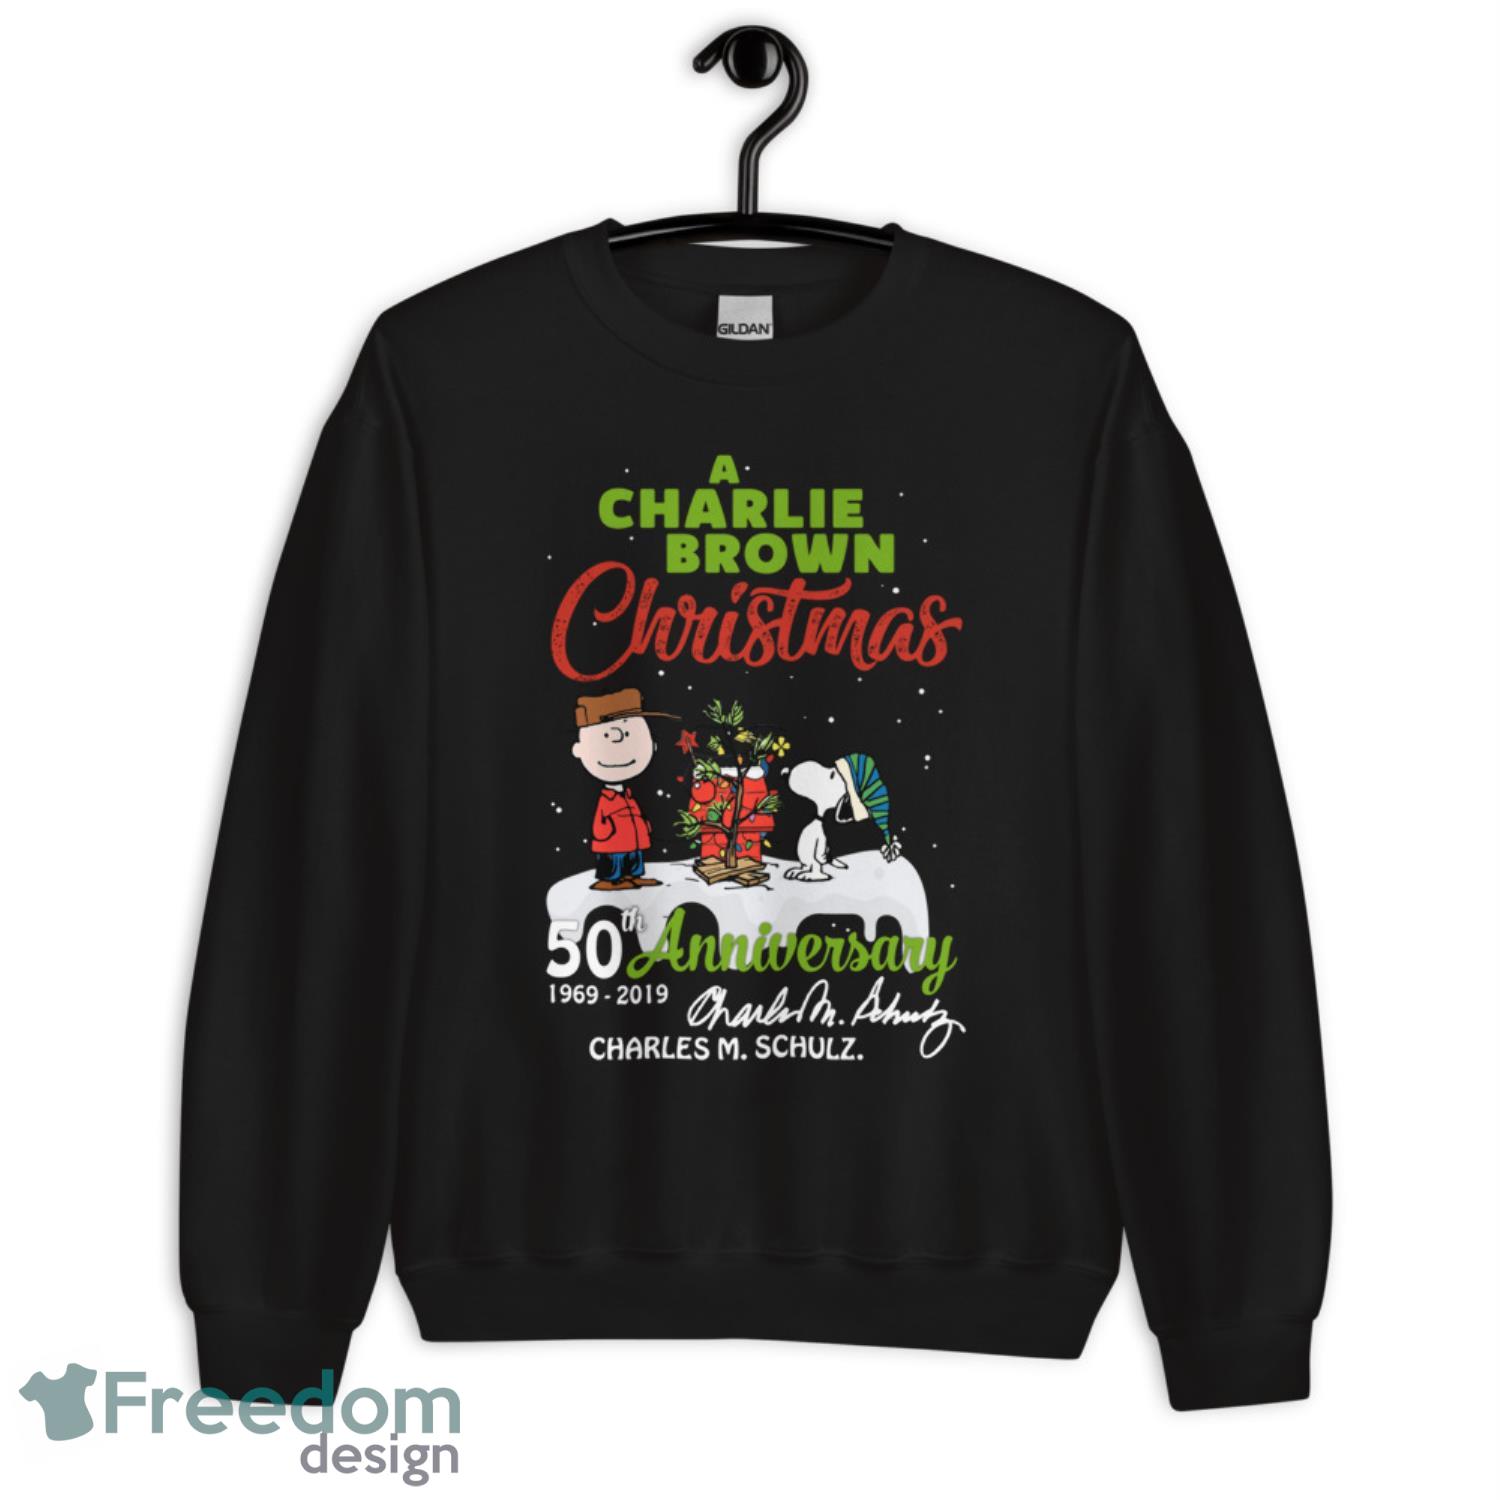 A Charlie Brown Christmas 50th Anniversary 1969 2019 Signature Shirt LV - G185 Crewneck Sweatshirt